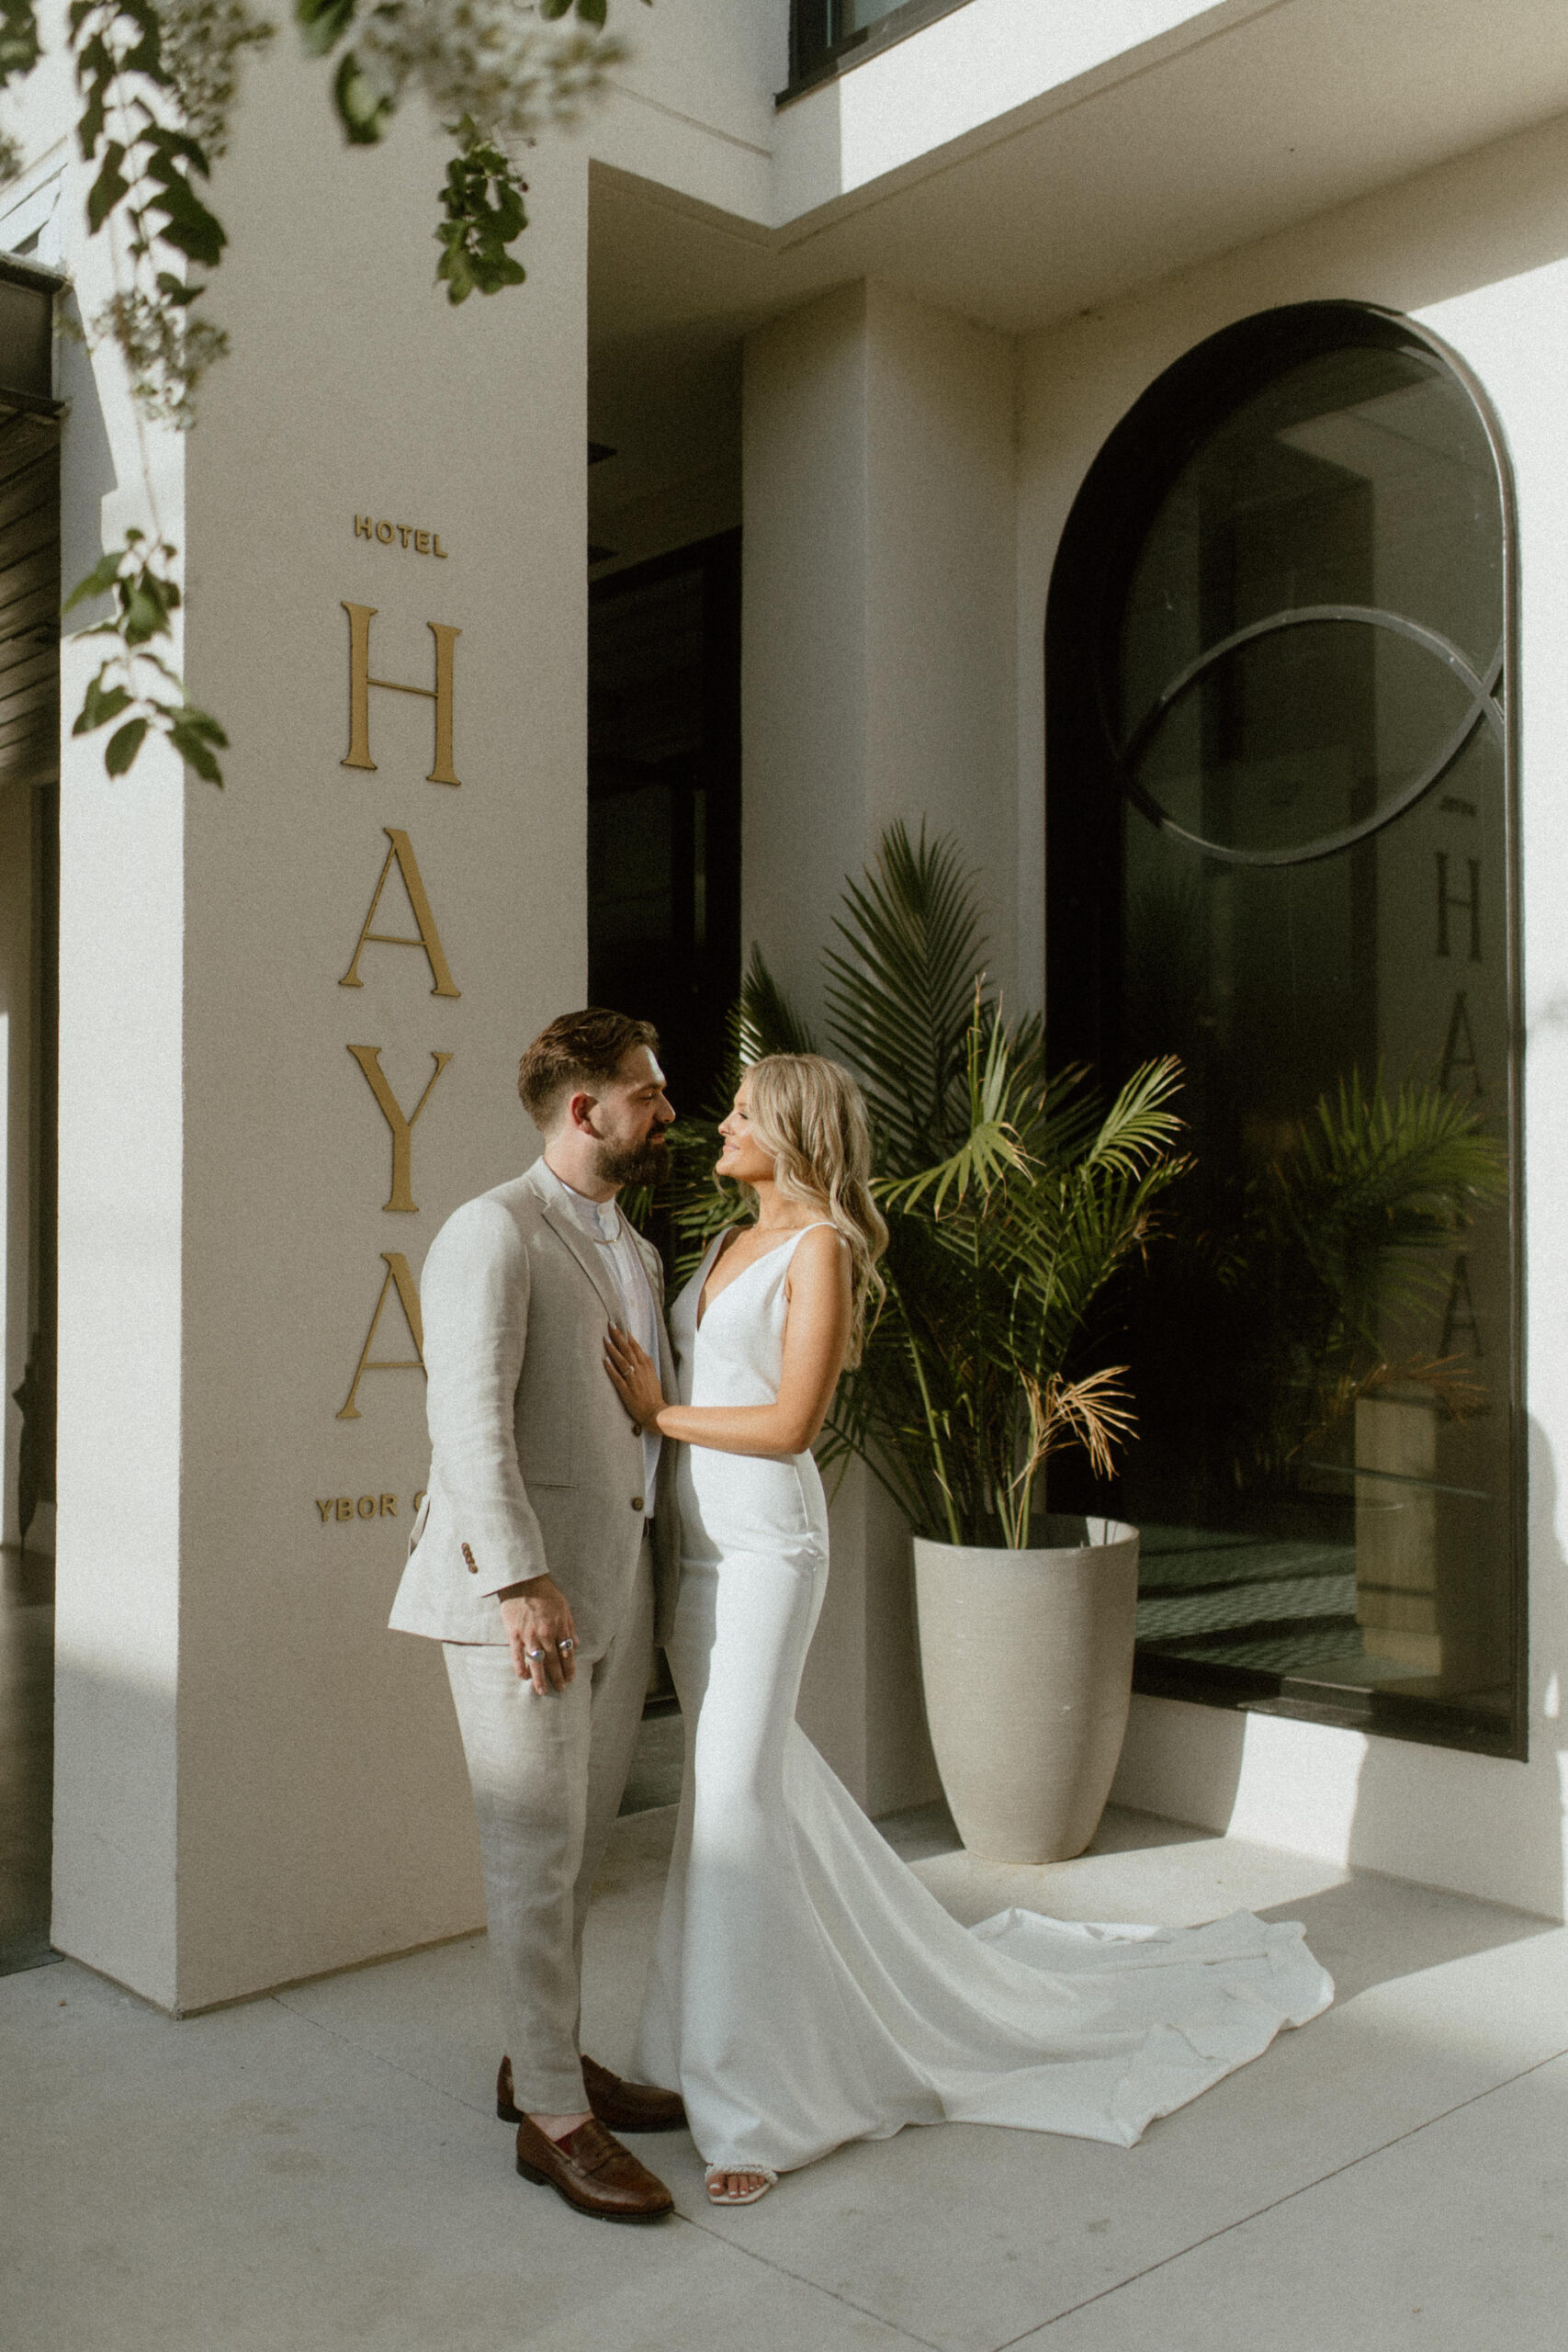 Bride and Groom Wedding Portrait | Ybor City Tampa Florida Hotel Haya